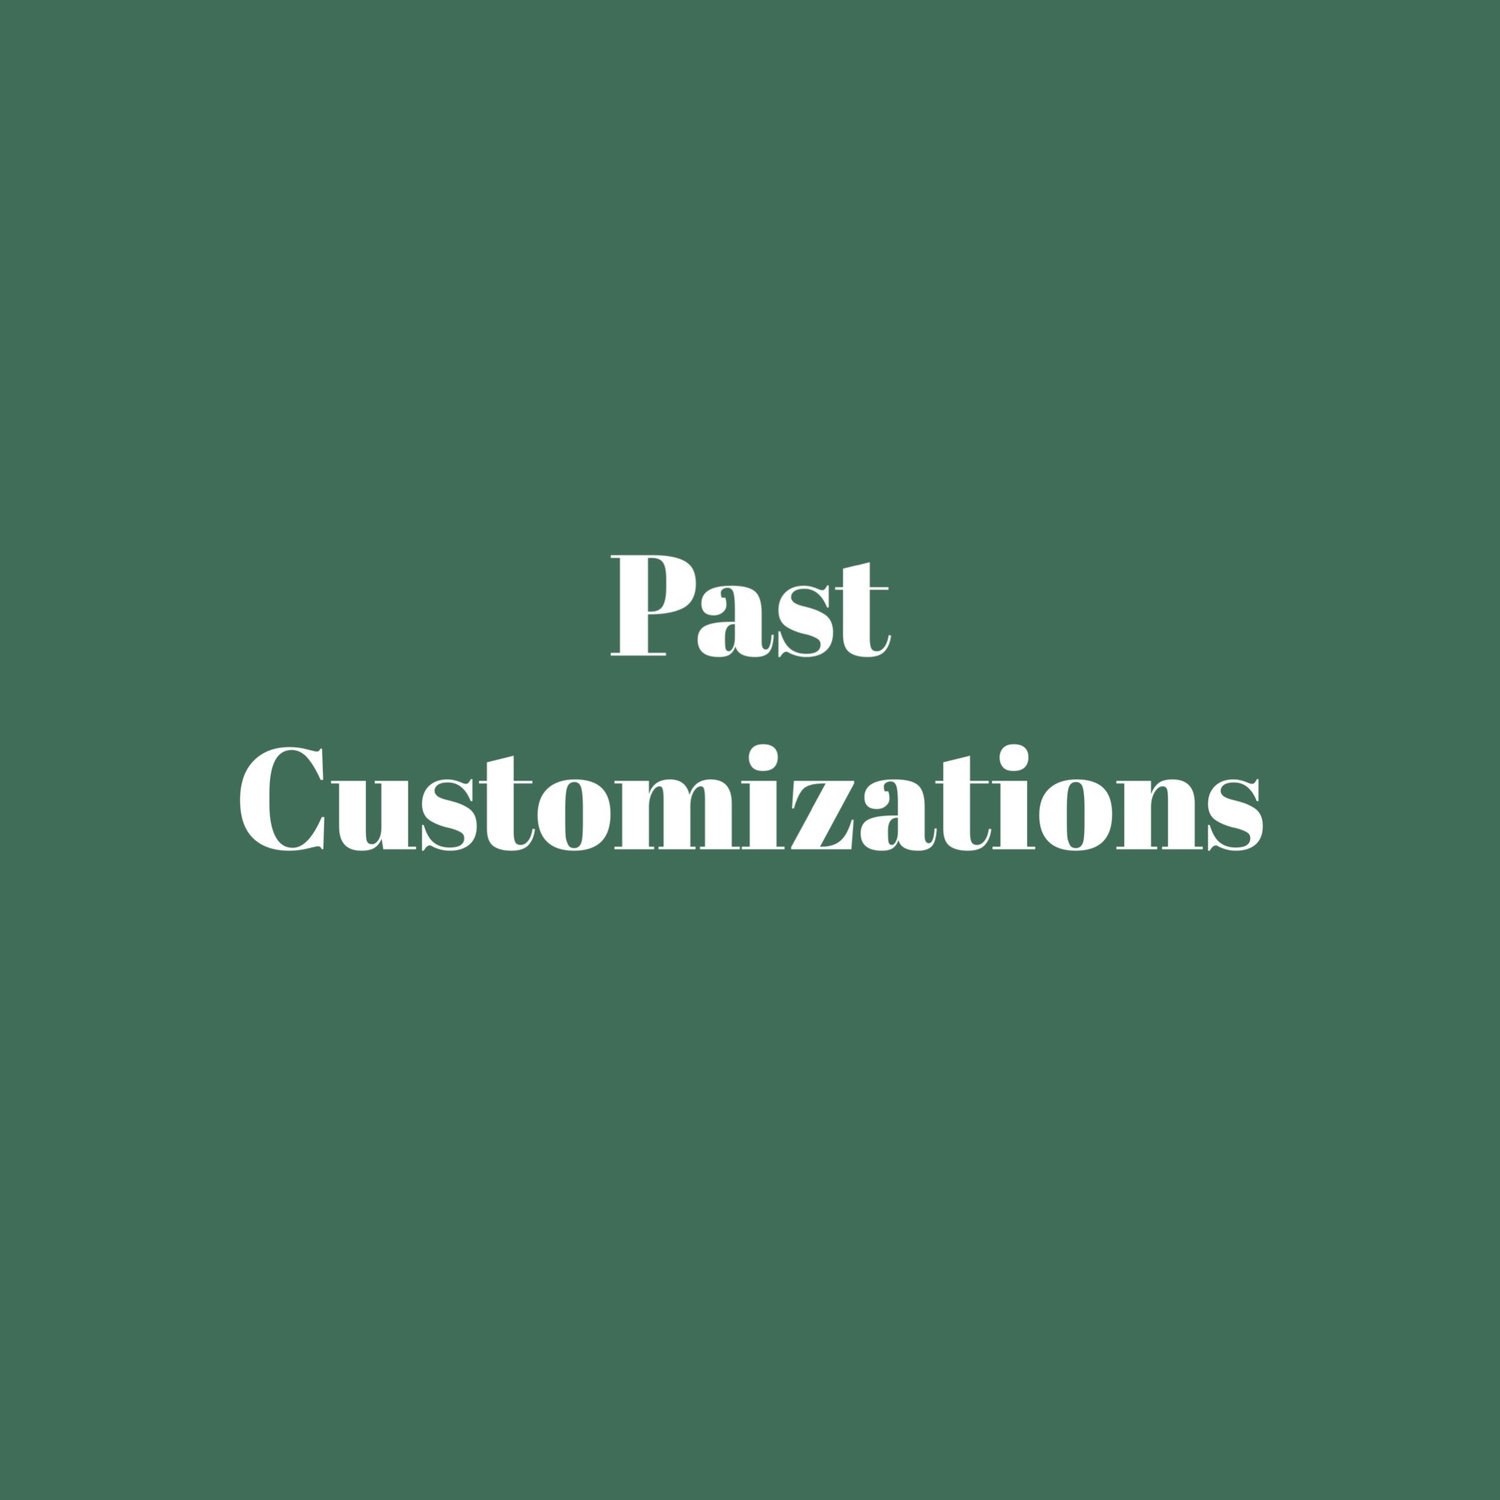 Past Customizations